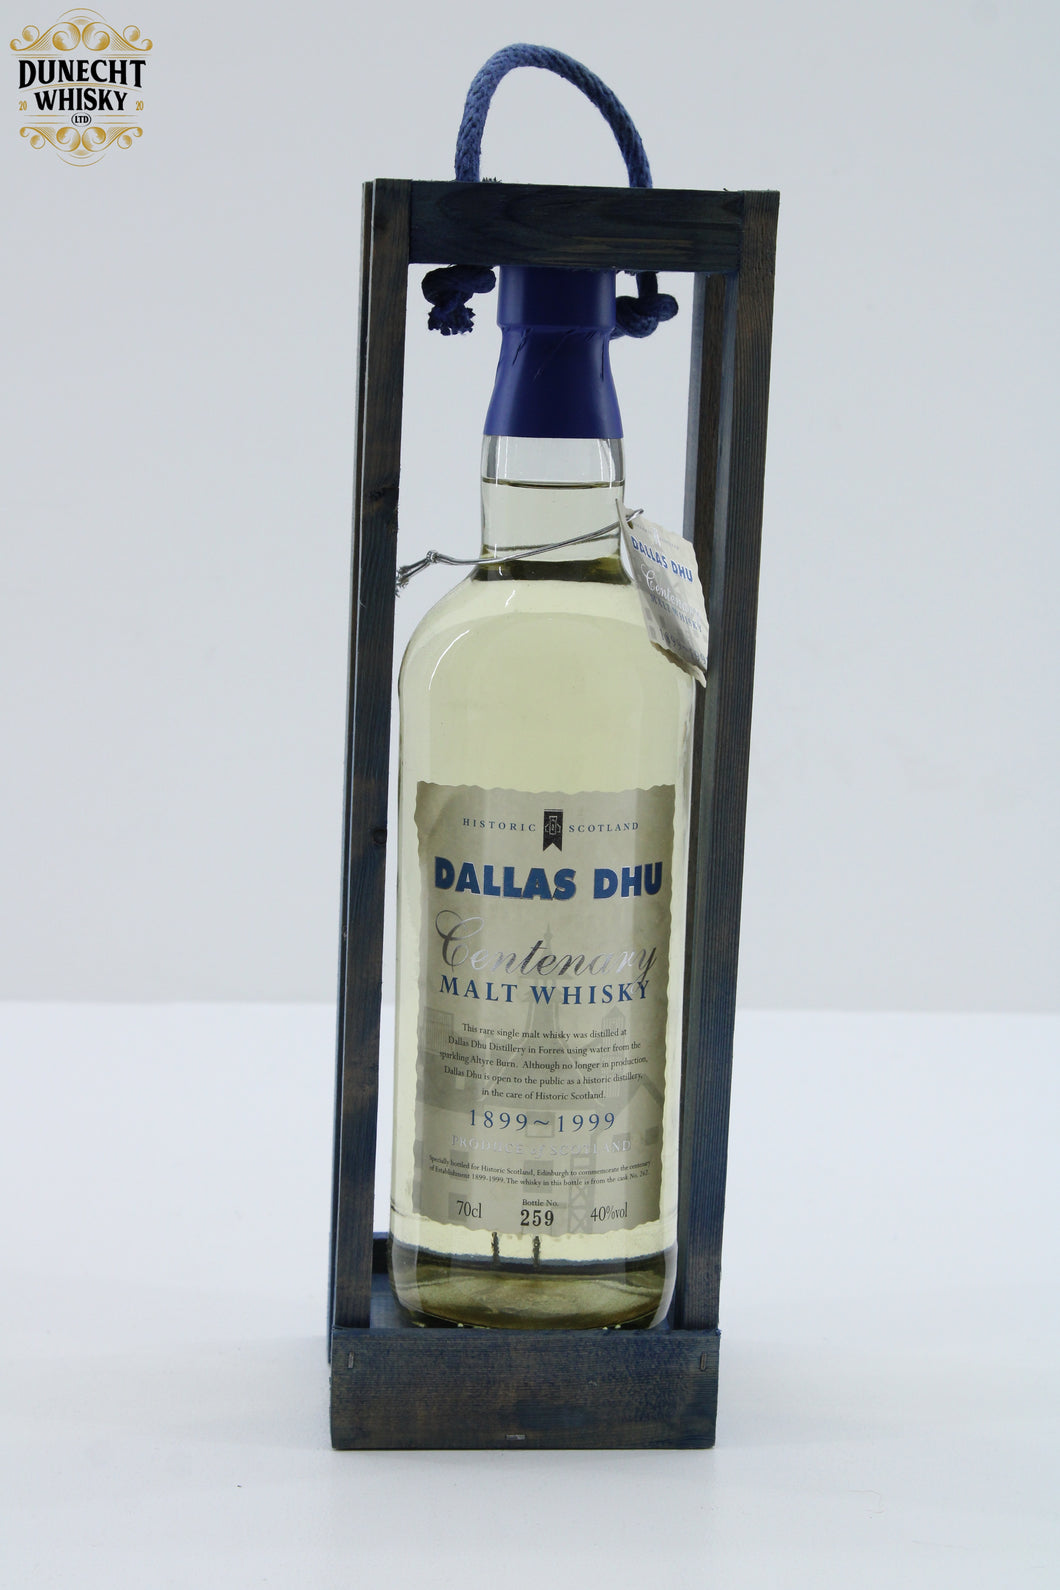 Dallas Dhu - Centenary Malt Whisky - Historic Scotland - Single Cask 259